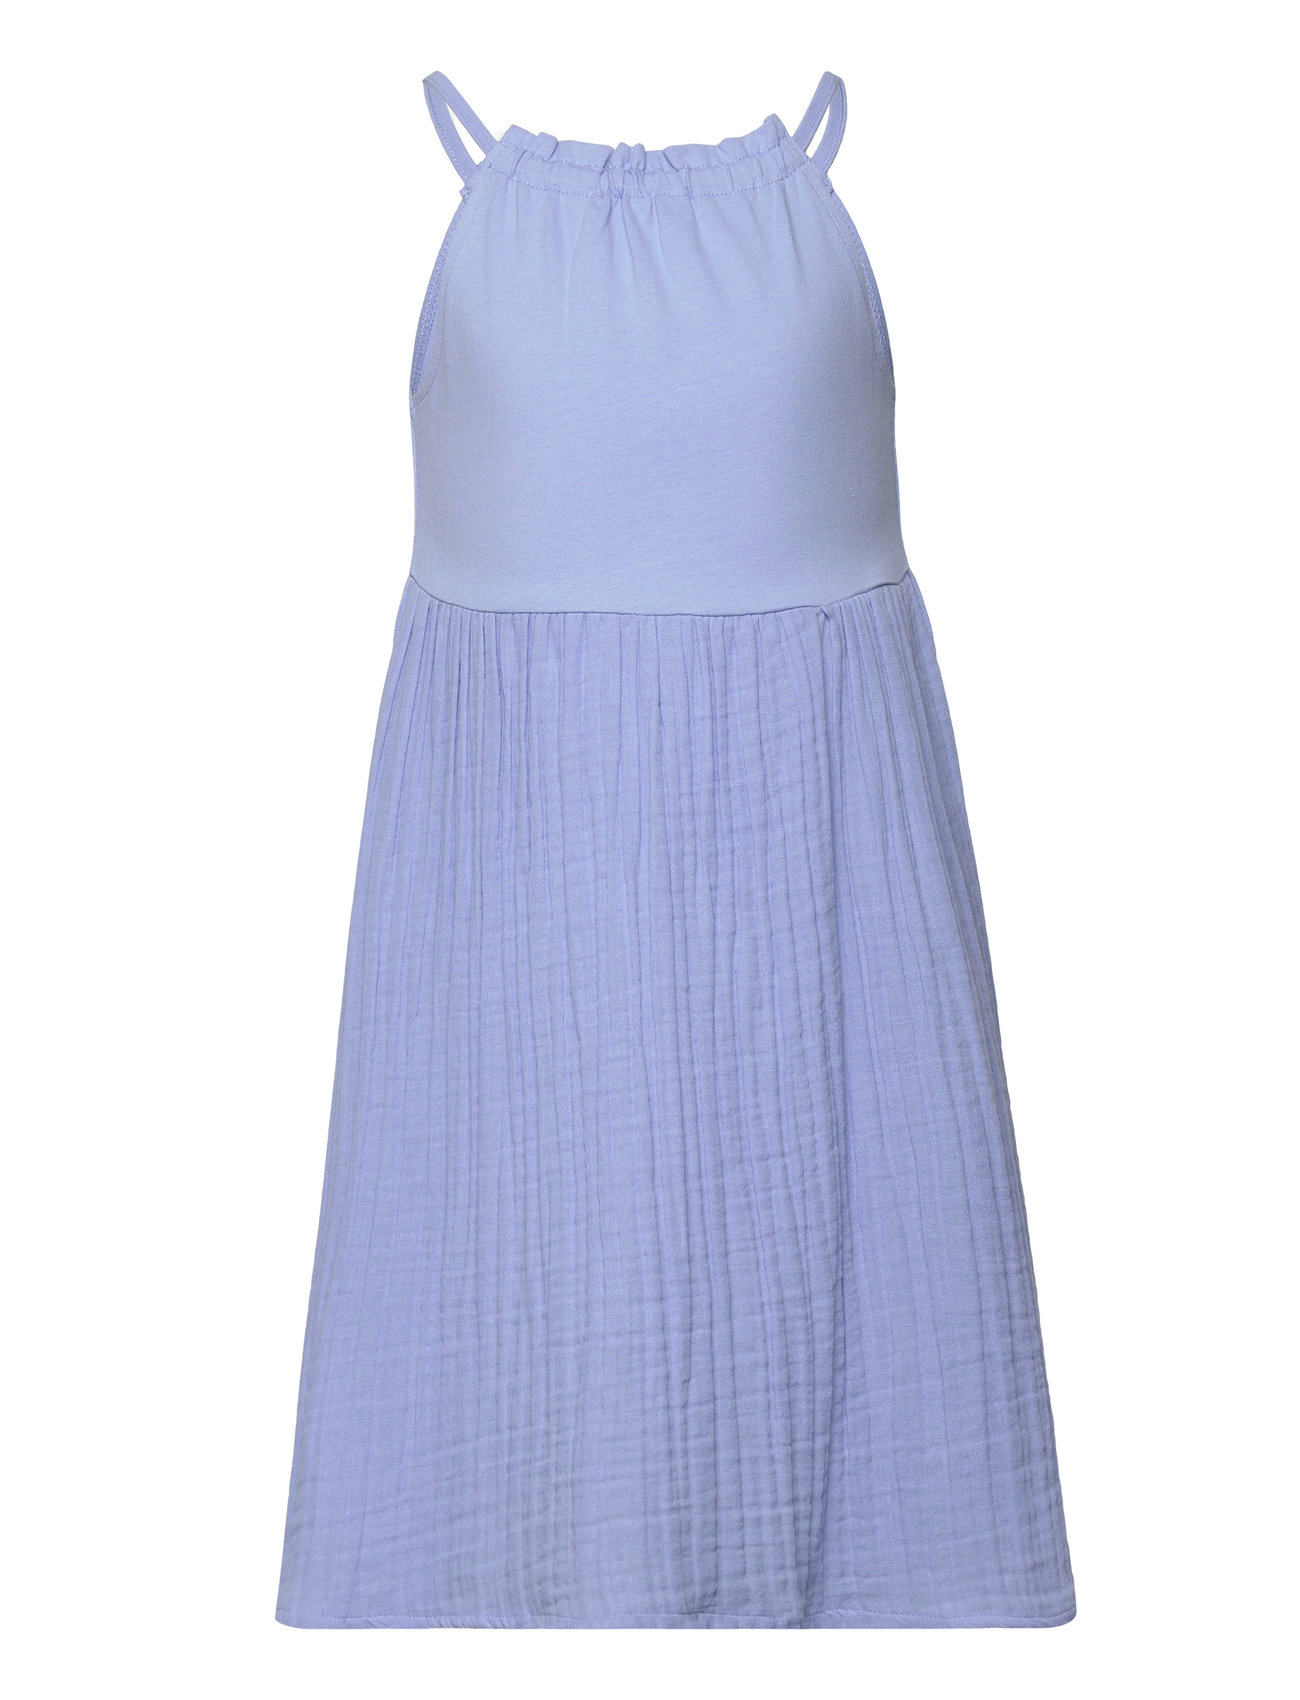 Cotton-Blend Dress Dresses & Skirts Dresses Casual Dresses Sleeveless Casual Dresses Blue Mango